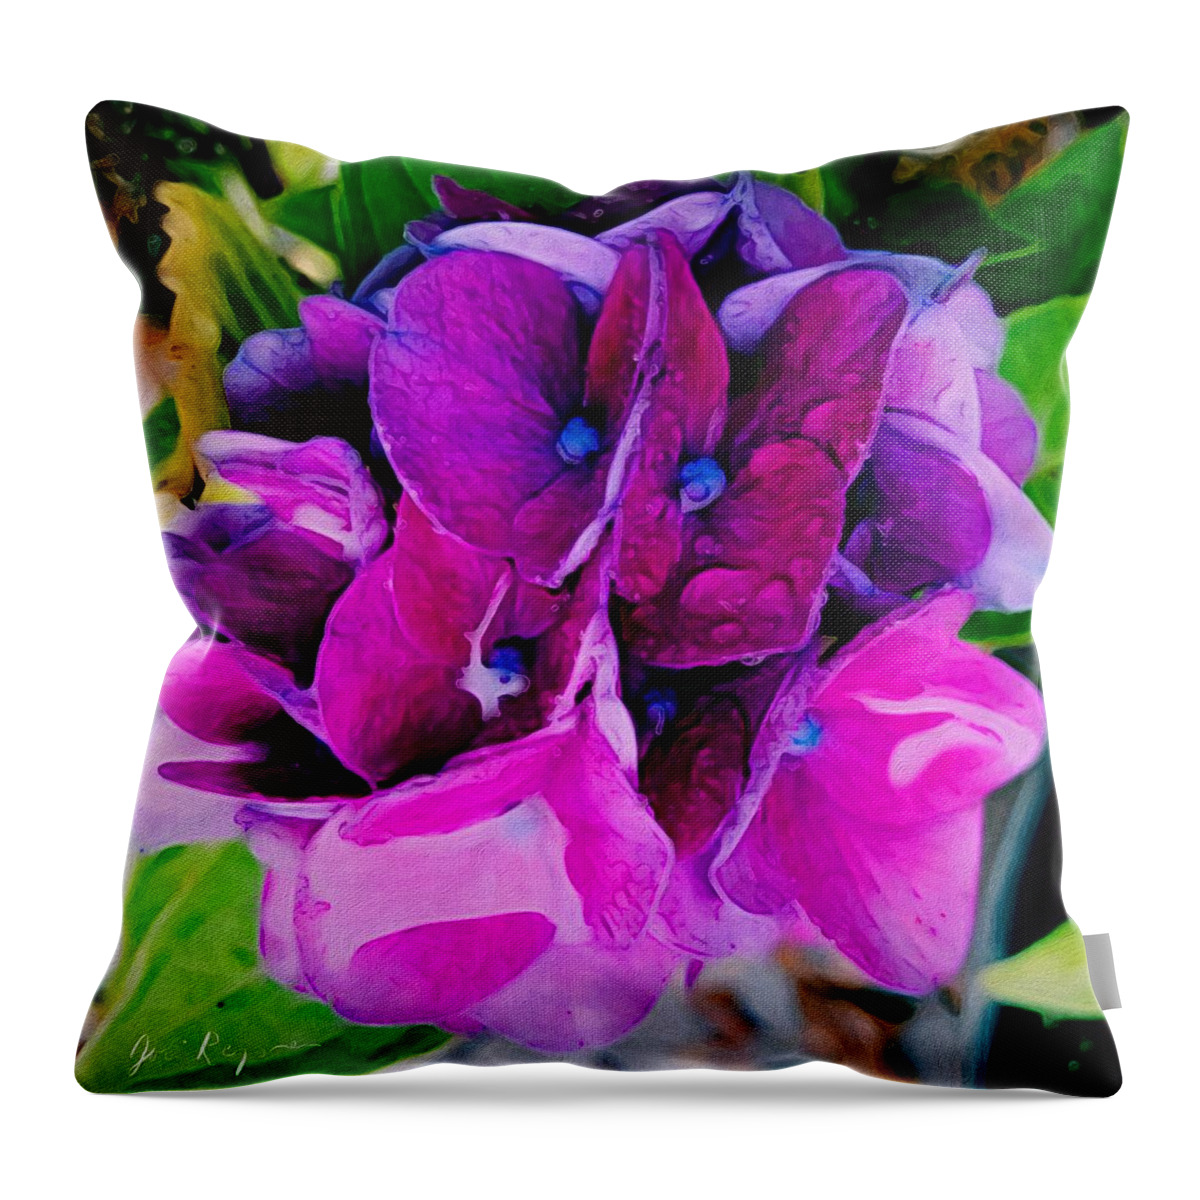 Brushstroke Throw Pillow featuring the photograph Bigleaf Hydrangea Flowers by Jori Reijonen